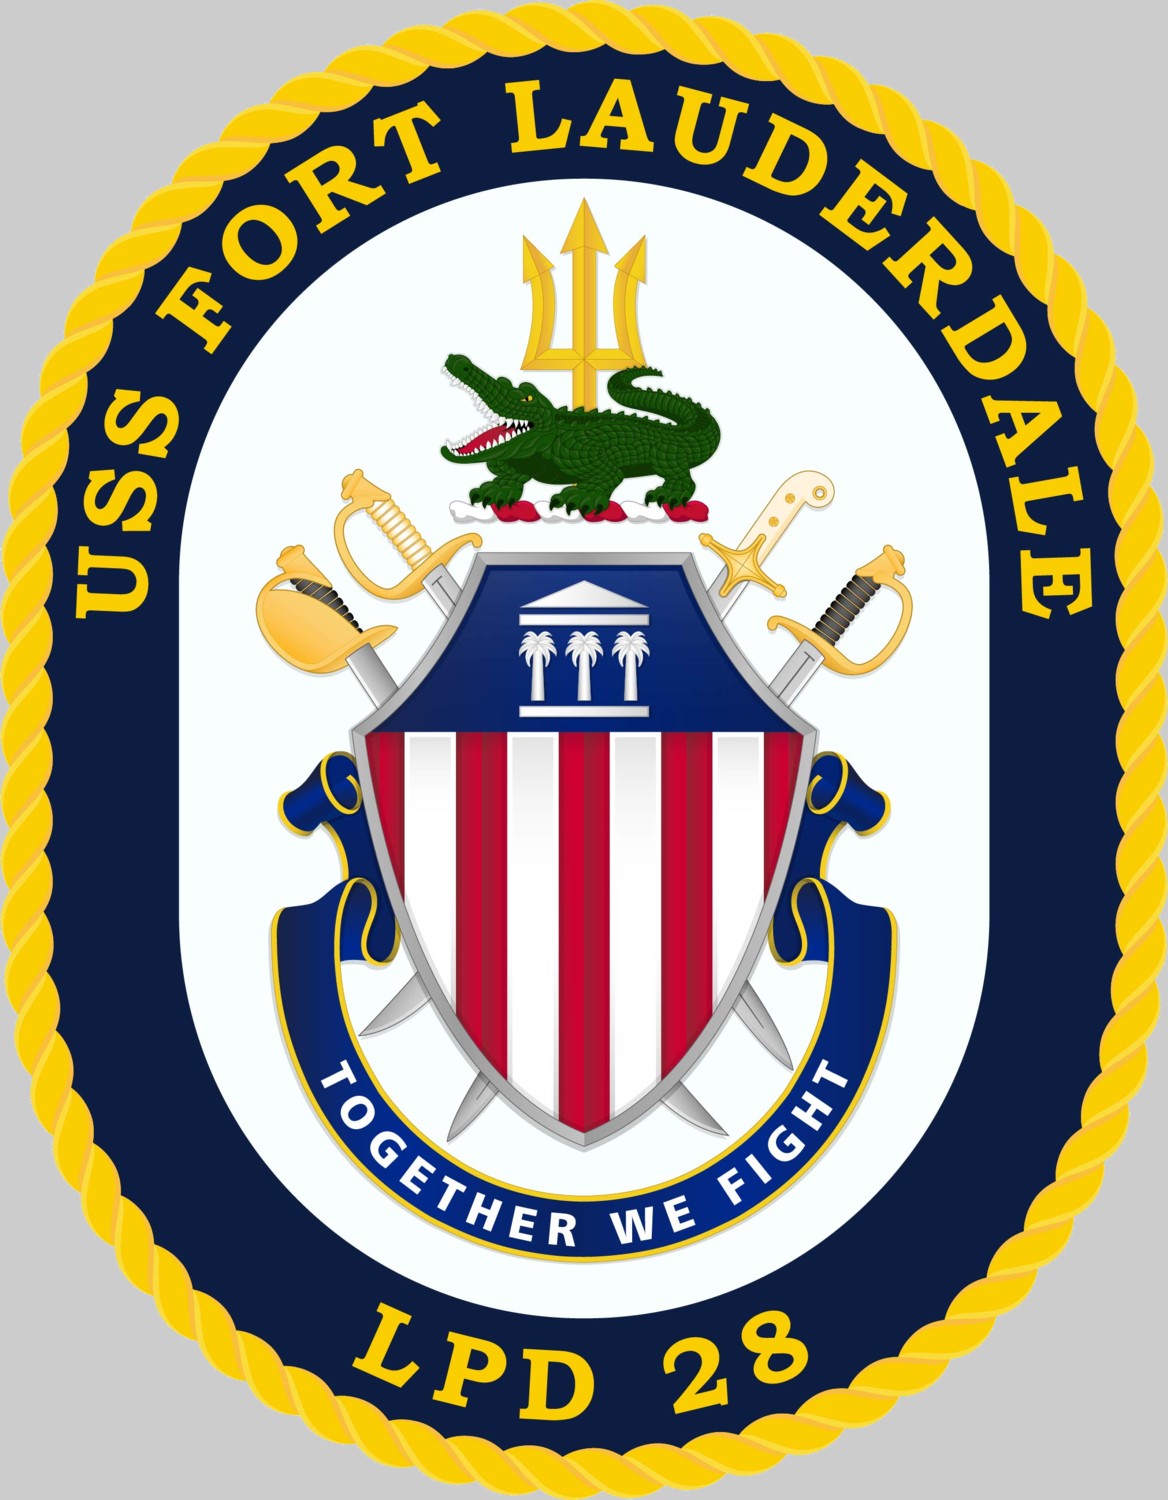 lpd-28 uss fort lauderdale crest insignia patch badge san antonio class amphibious transport dock landing ship us navy 02x